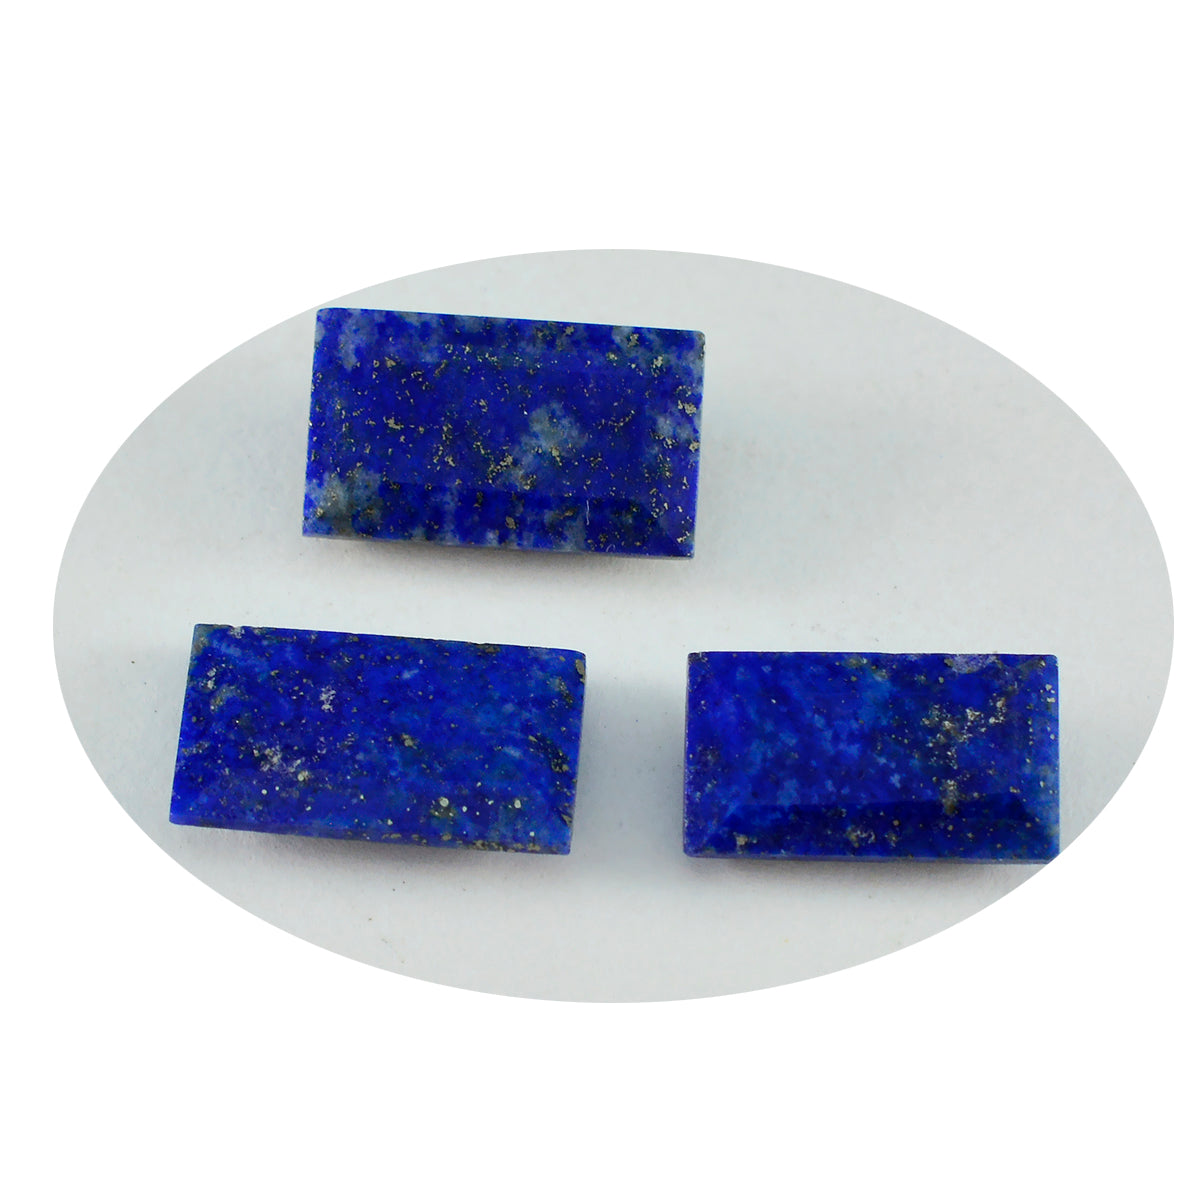 Riyogems 1PC Echte Blauwe Lapis Lazuli Facet 8x16 mm Baguette Vorm zoete Kwaliteit Edelsteen